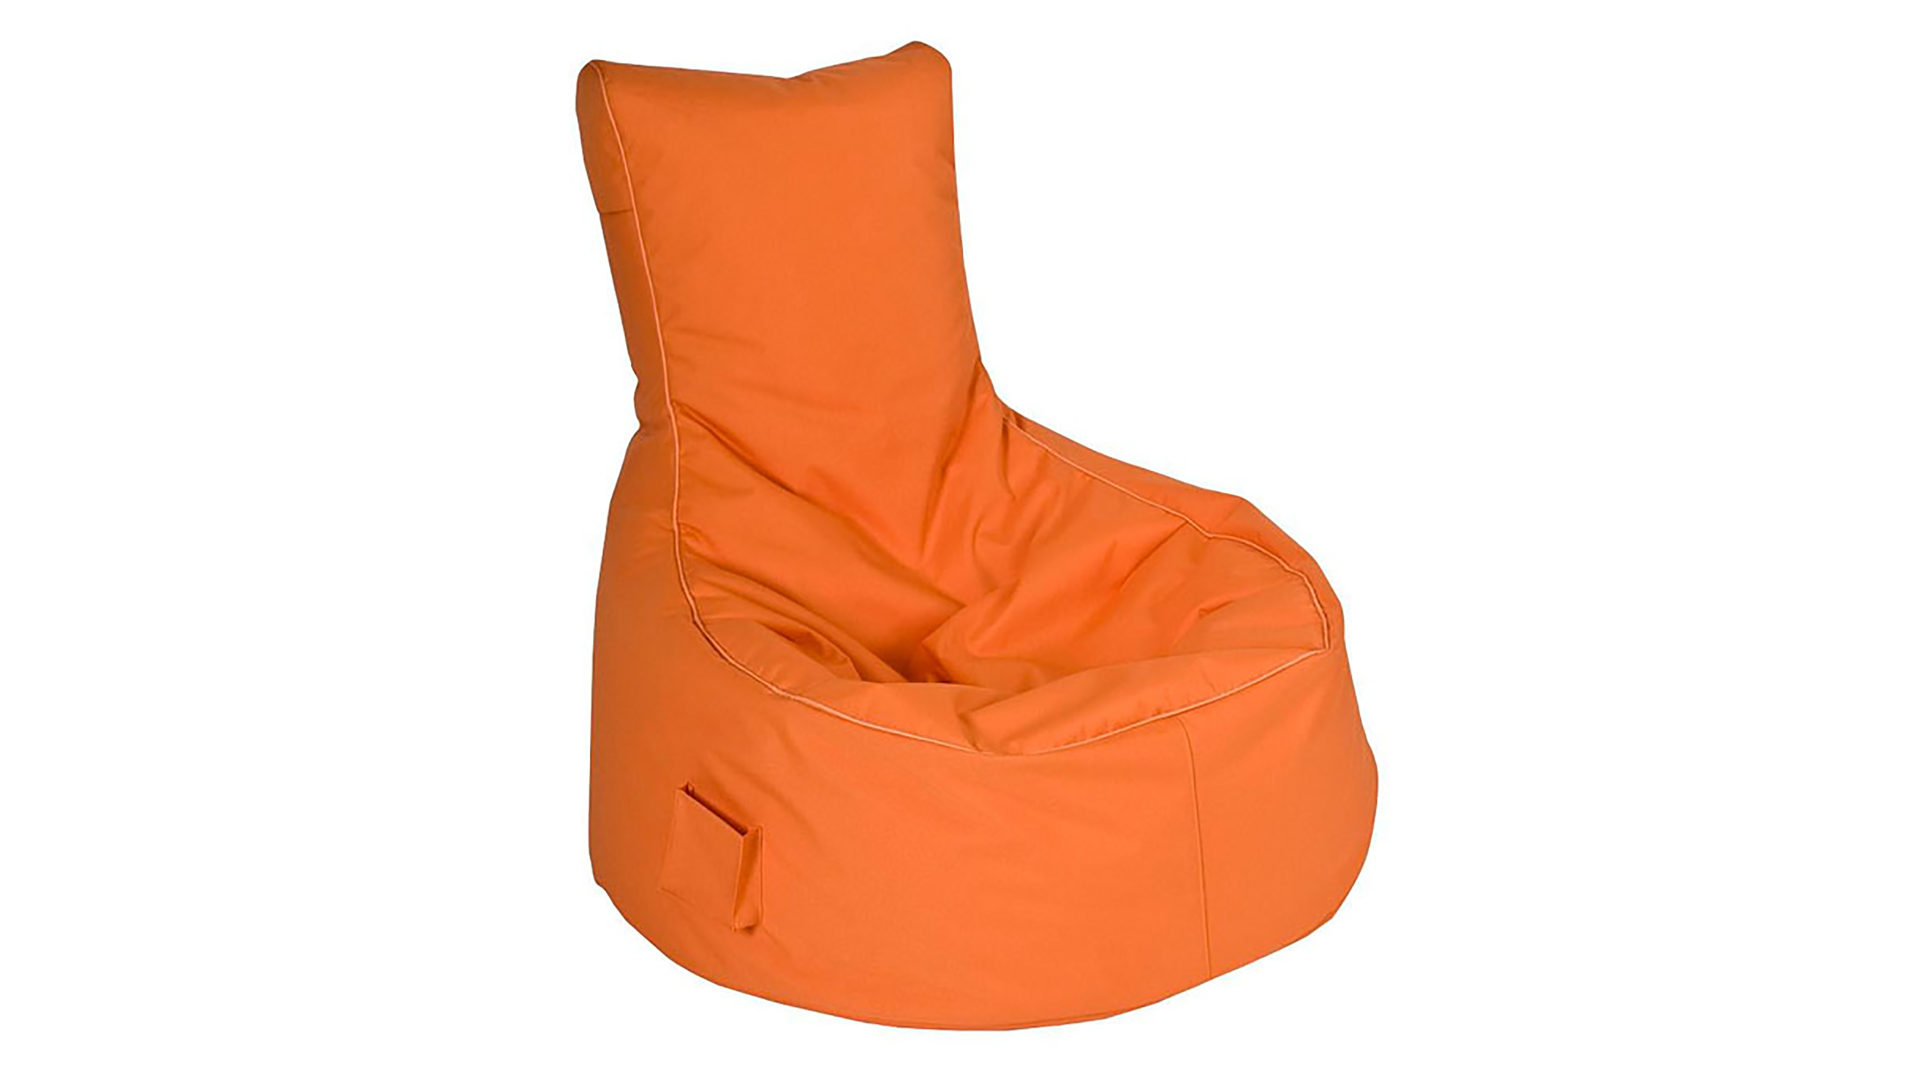 Sitzsack-Sessel Magma sitting point aus Stoff in Orange SITTING POINT Sitzsack-Sessel Scuba Swing als originelles Sitzmöbel oranger Kunstfaserbezug - ca. 95 x 90 x 65 cm